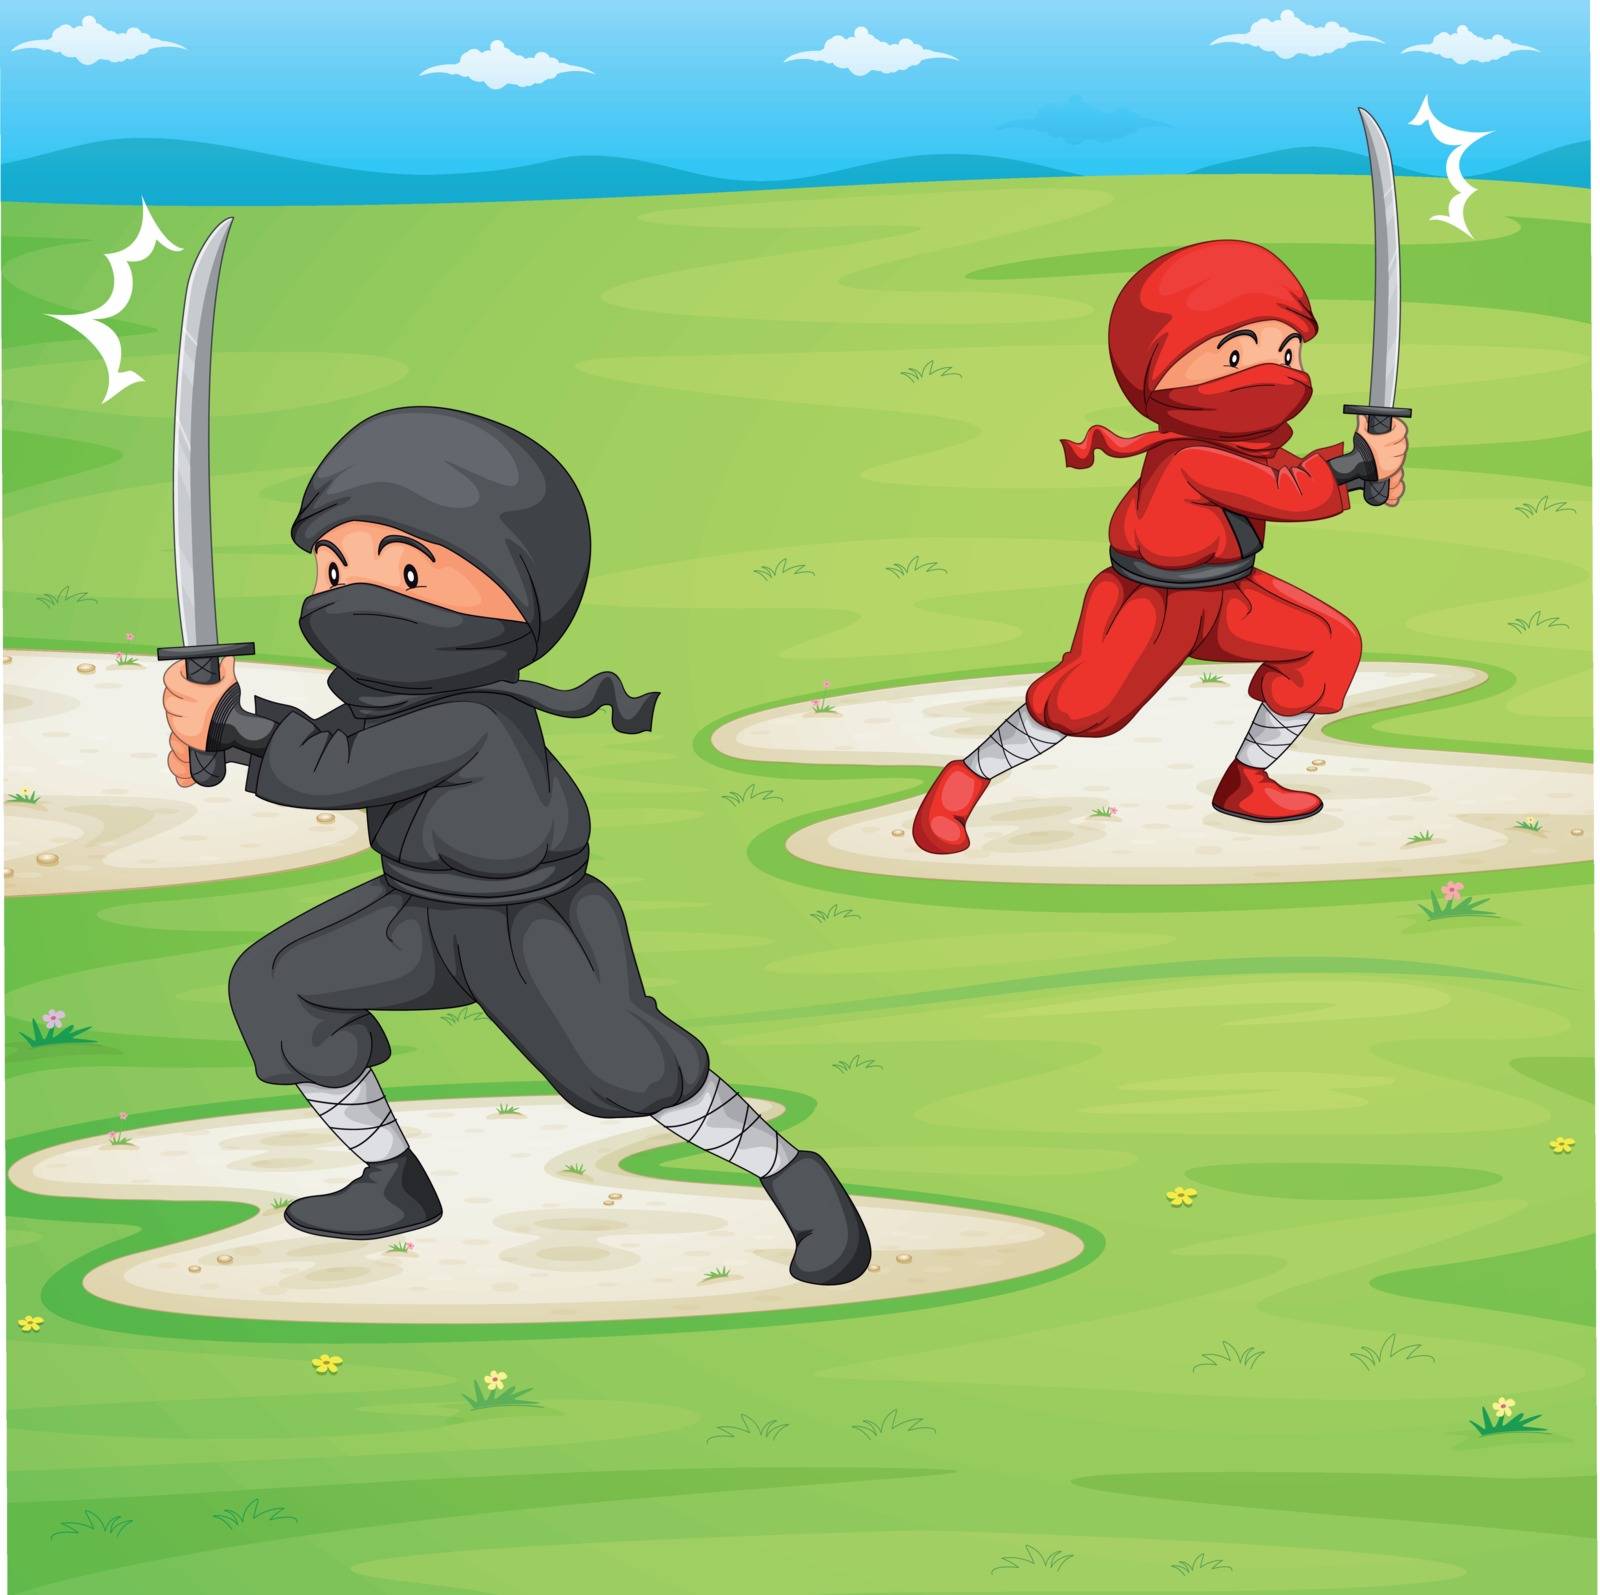 Illustration of a ninja in a field